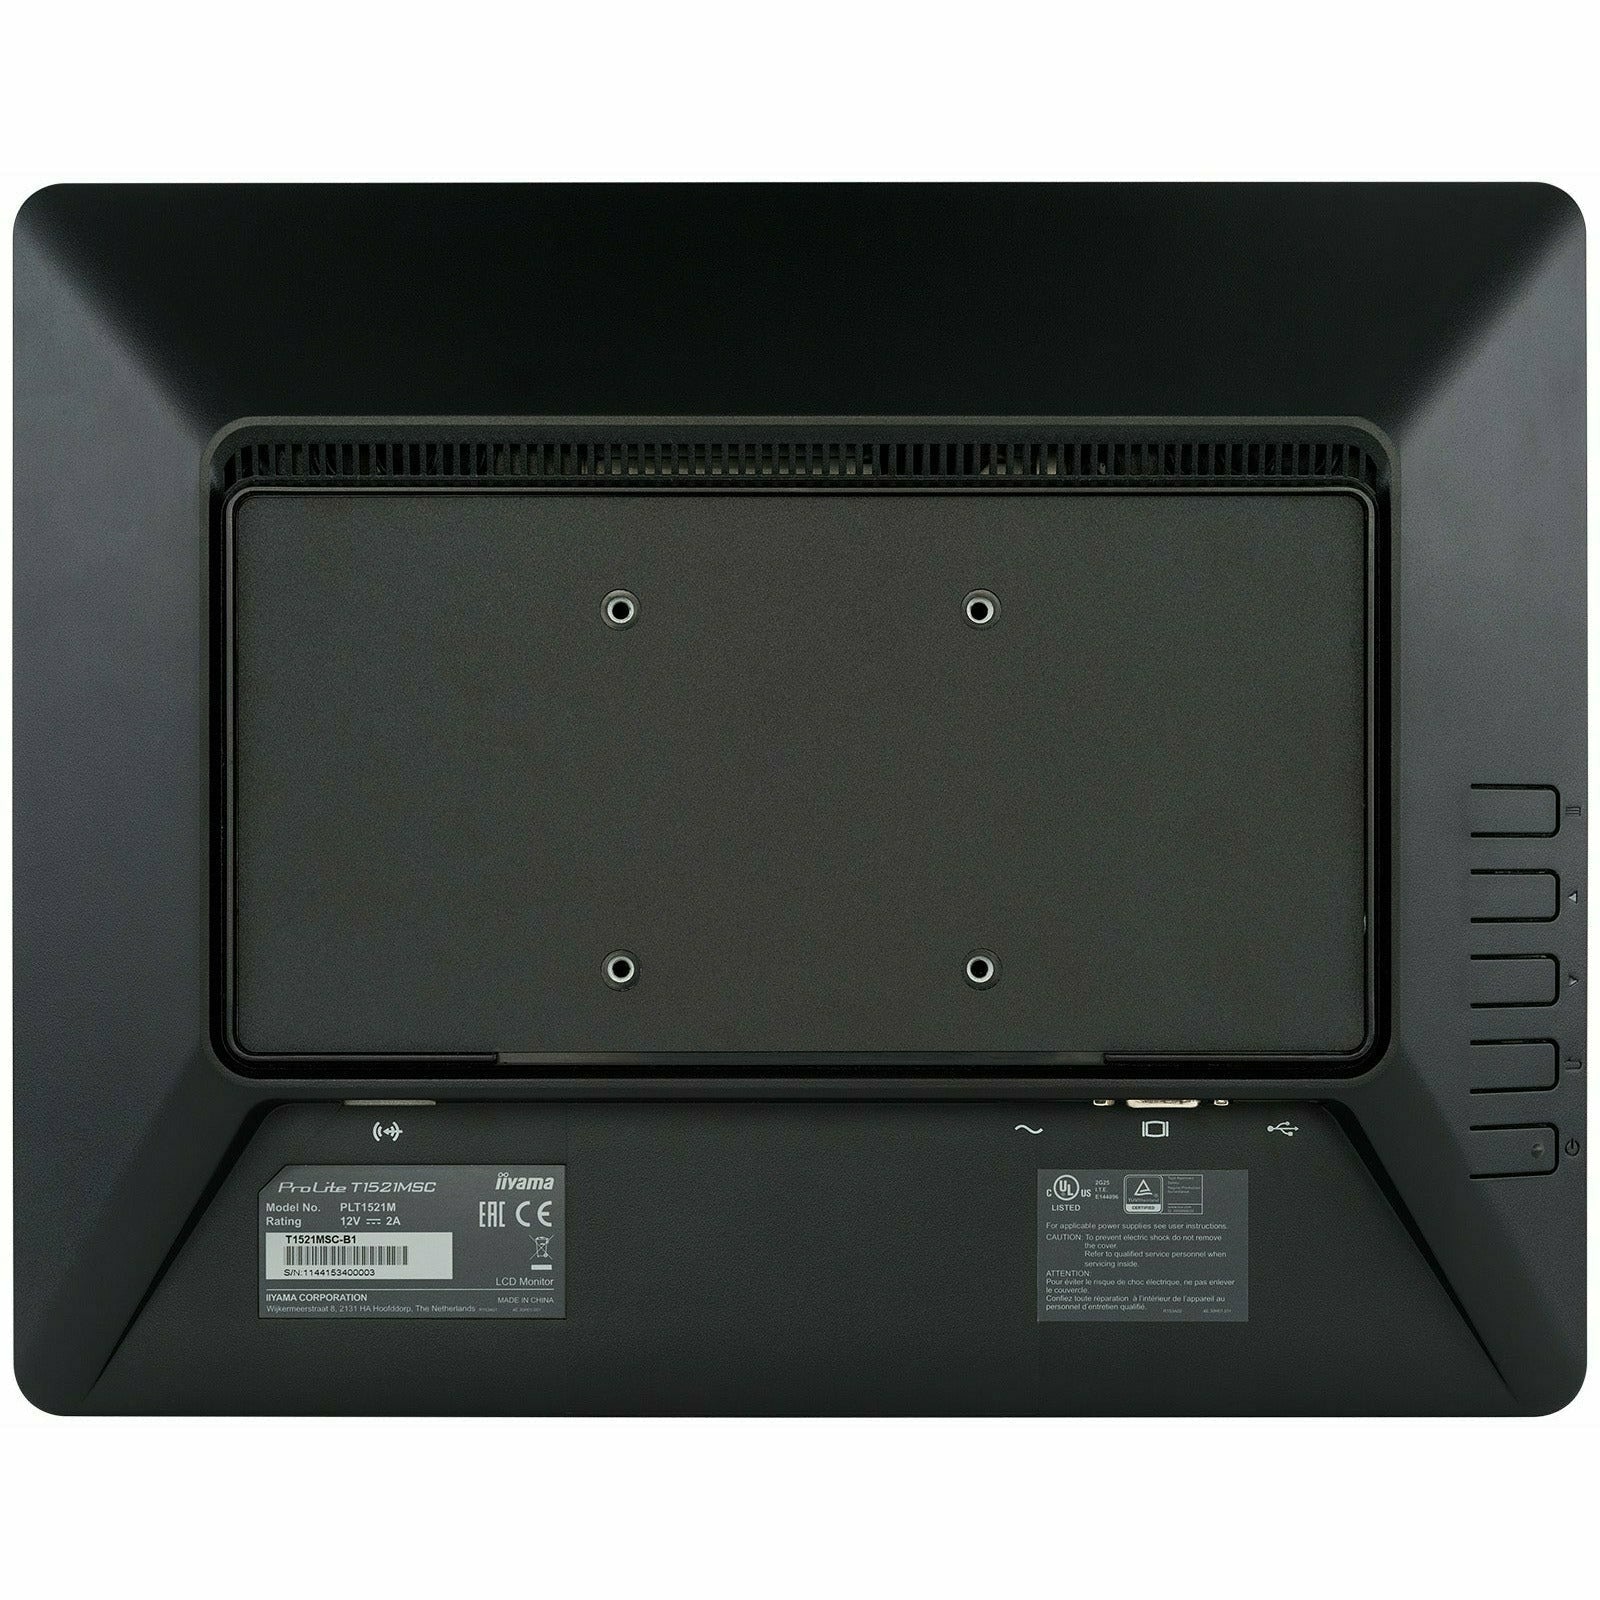 iiyama ProLite T1521MSC-B1 15" Professional Capacitive Touch Screen Display